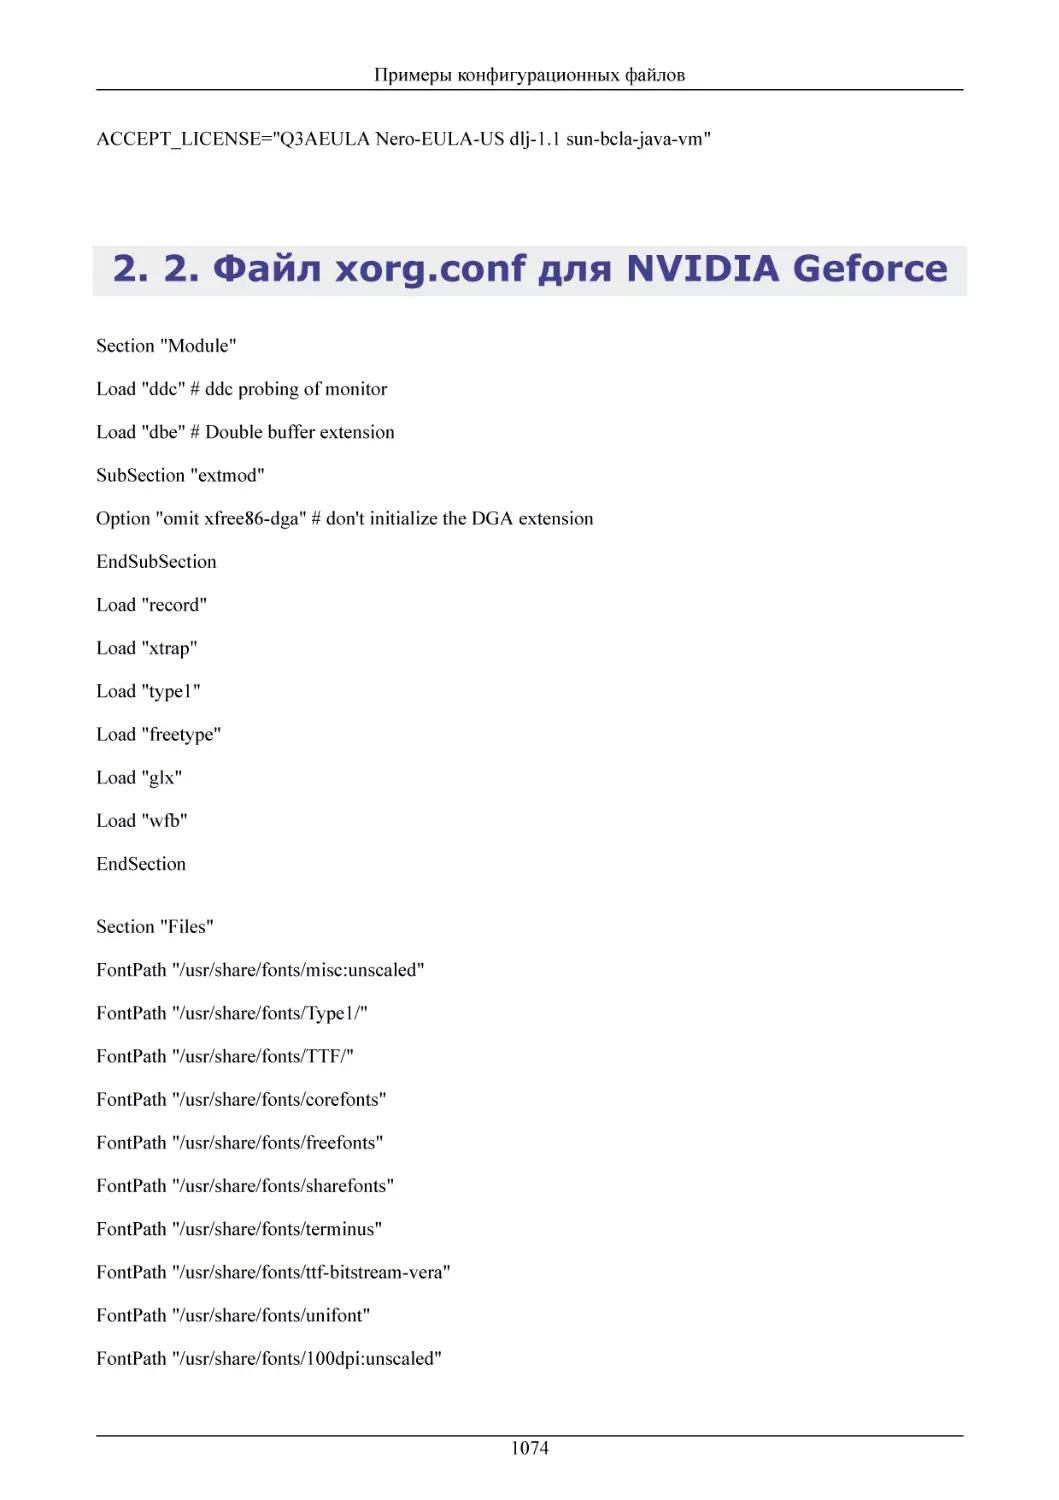 2. Файл xorg.conf для NVIDIA Geforce